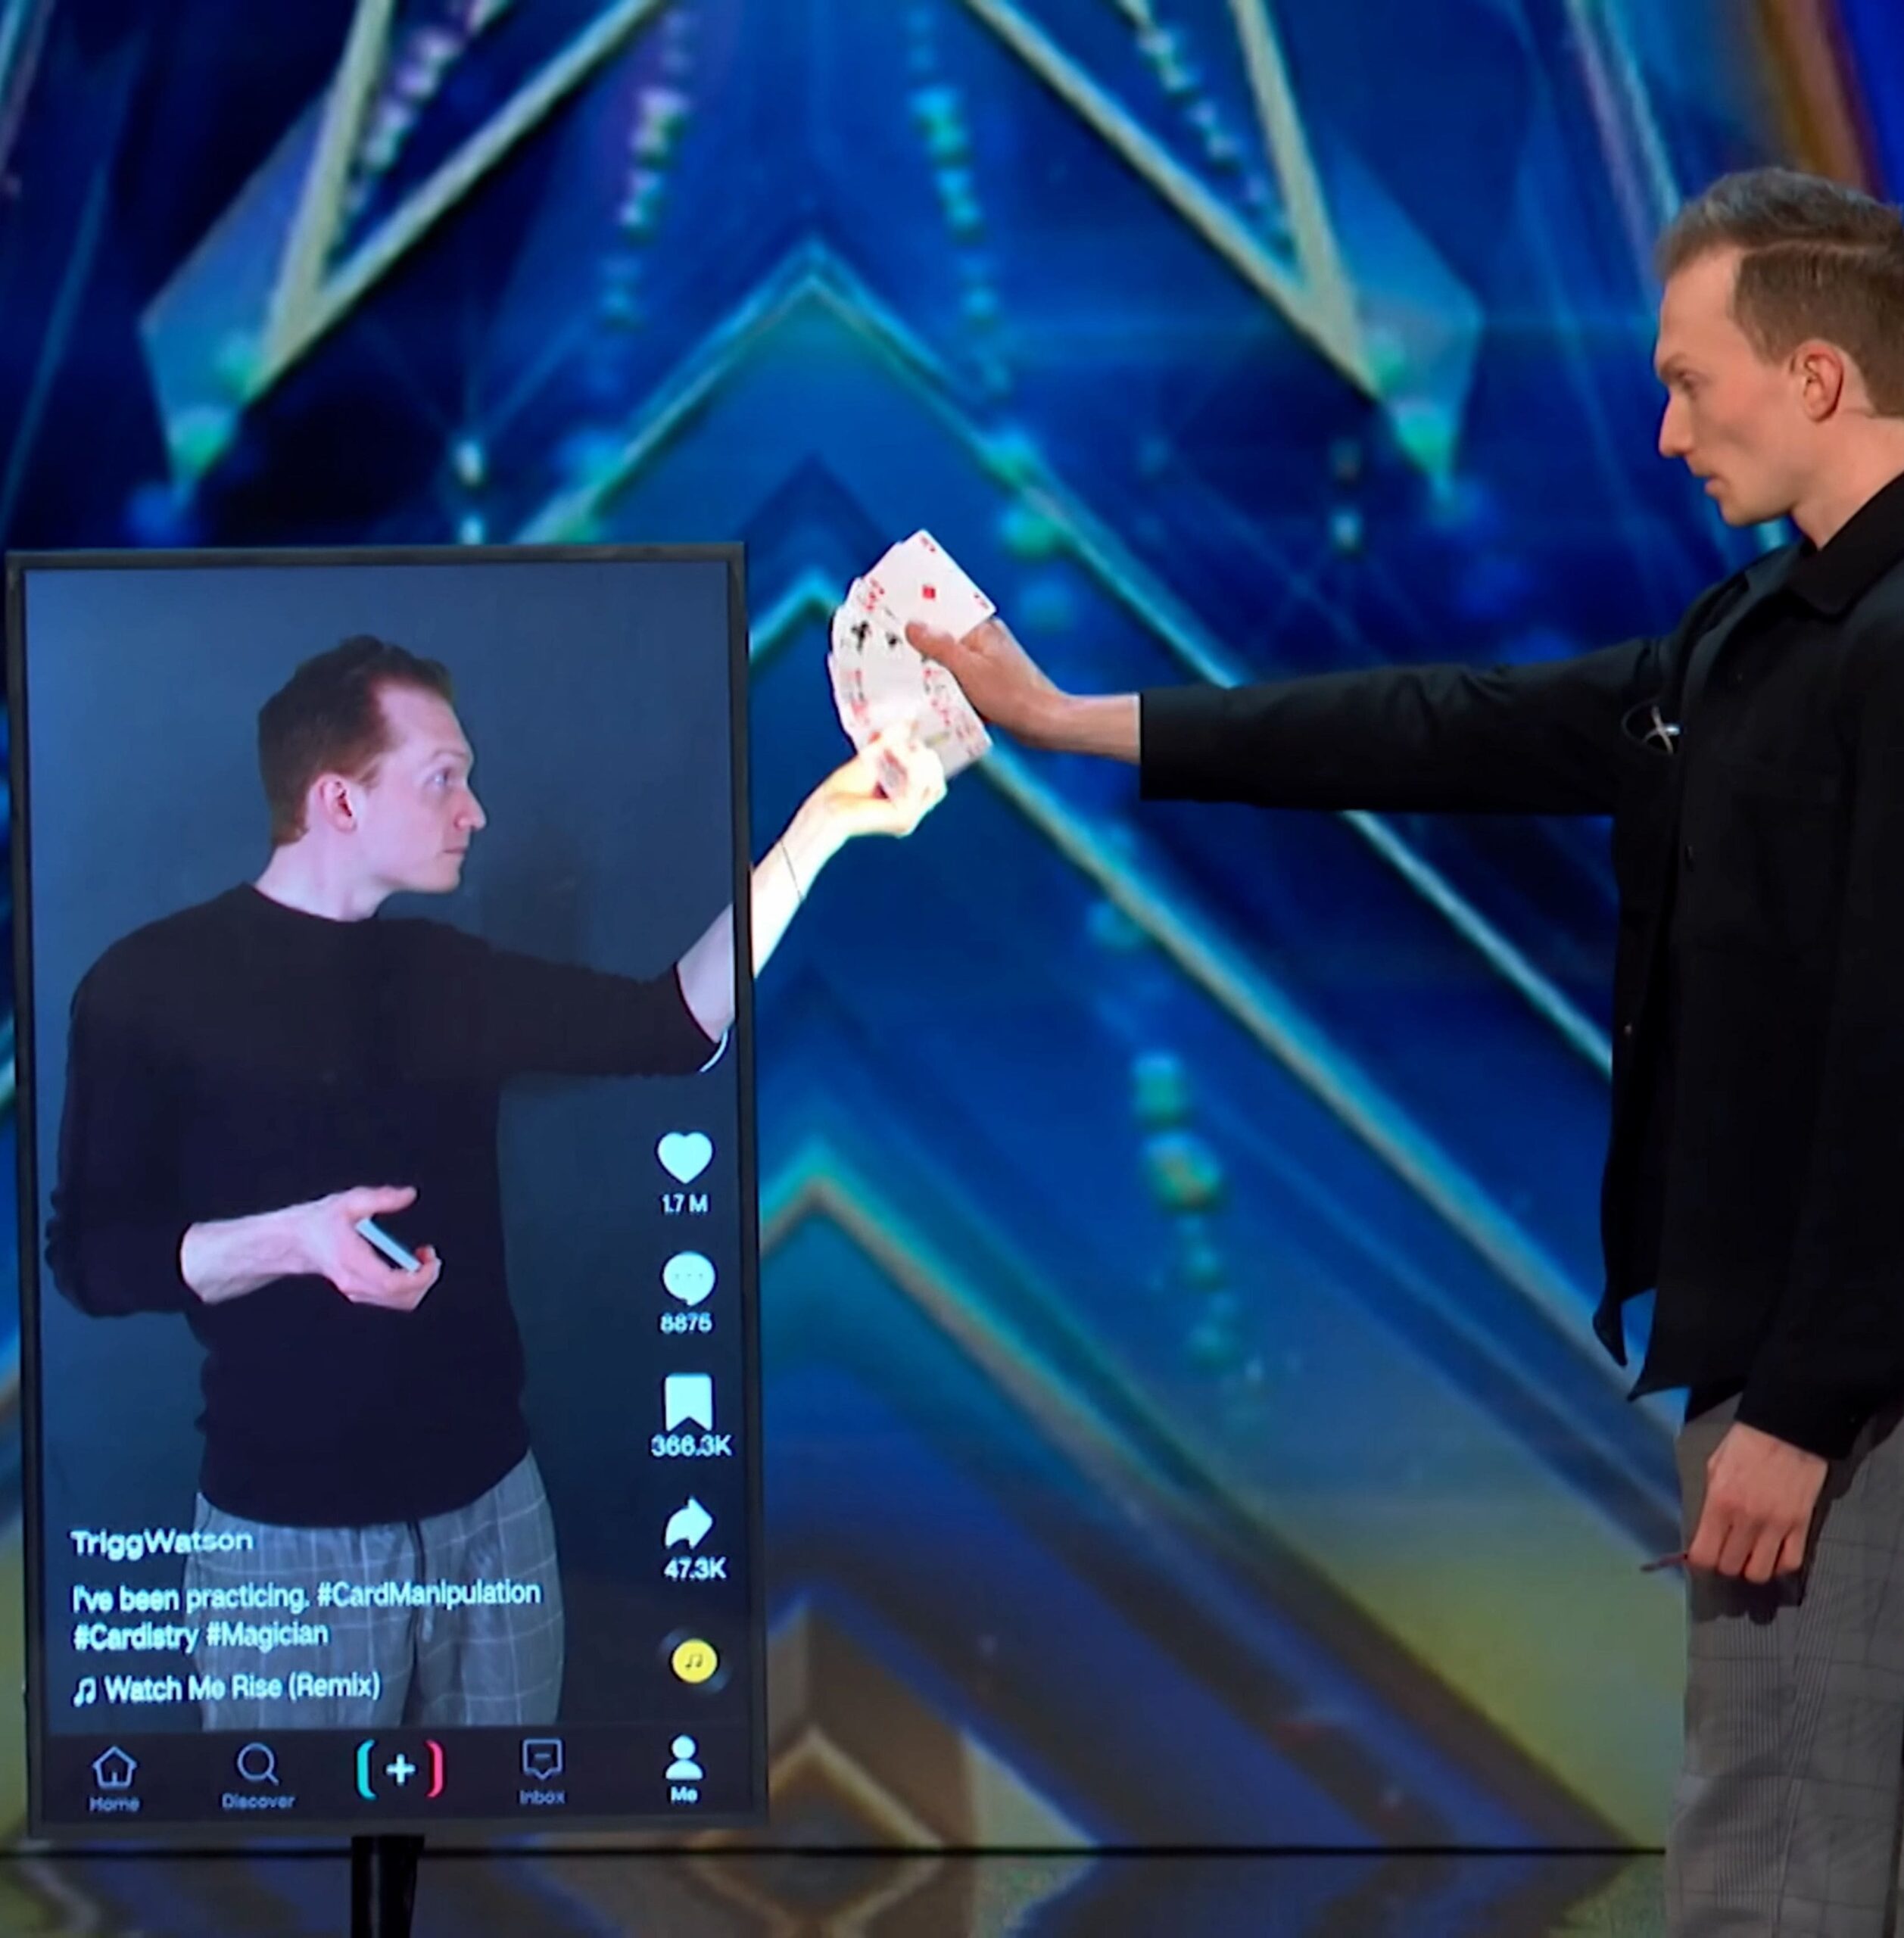 A holographic version of Trigg hands Trigg some cards through a TV screen.